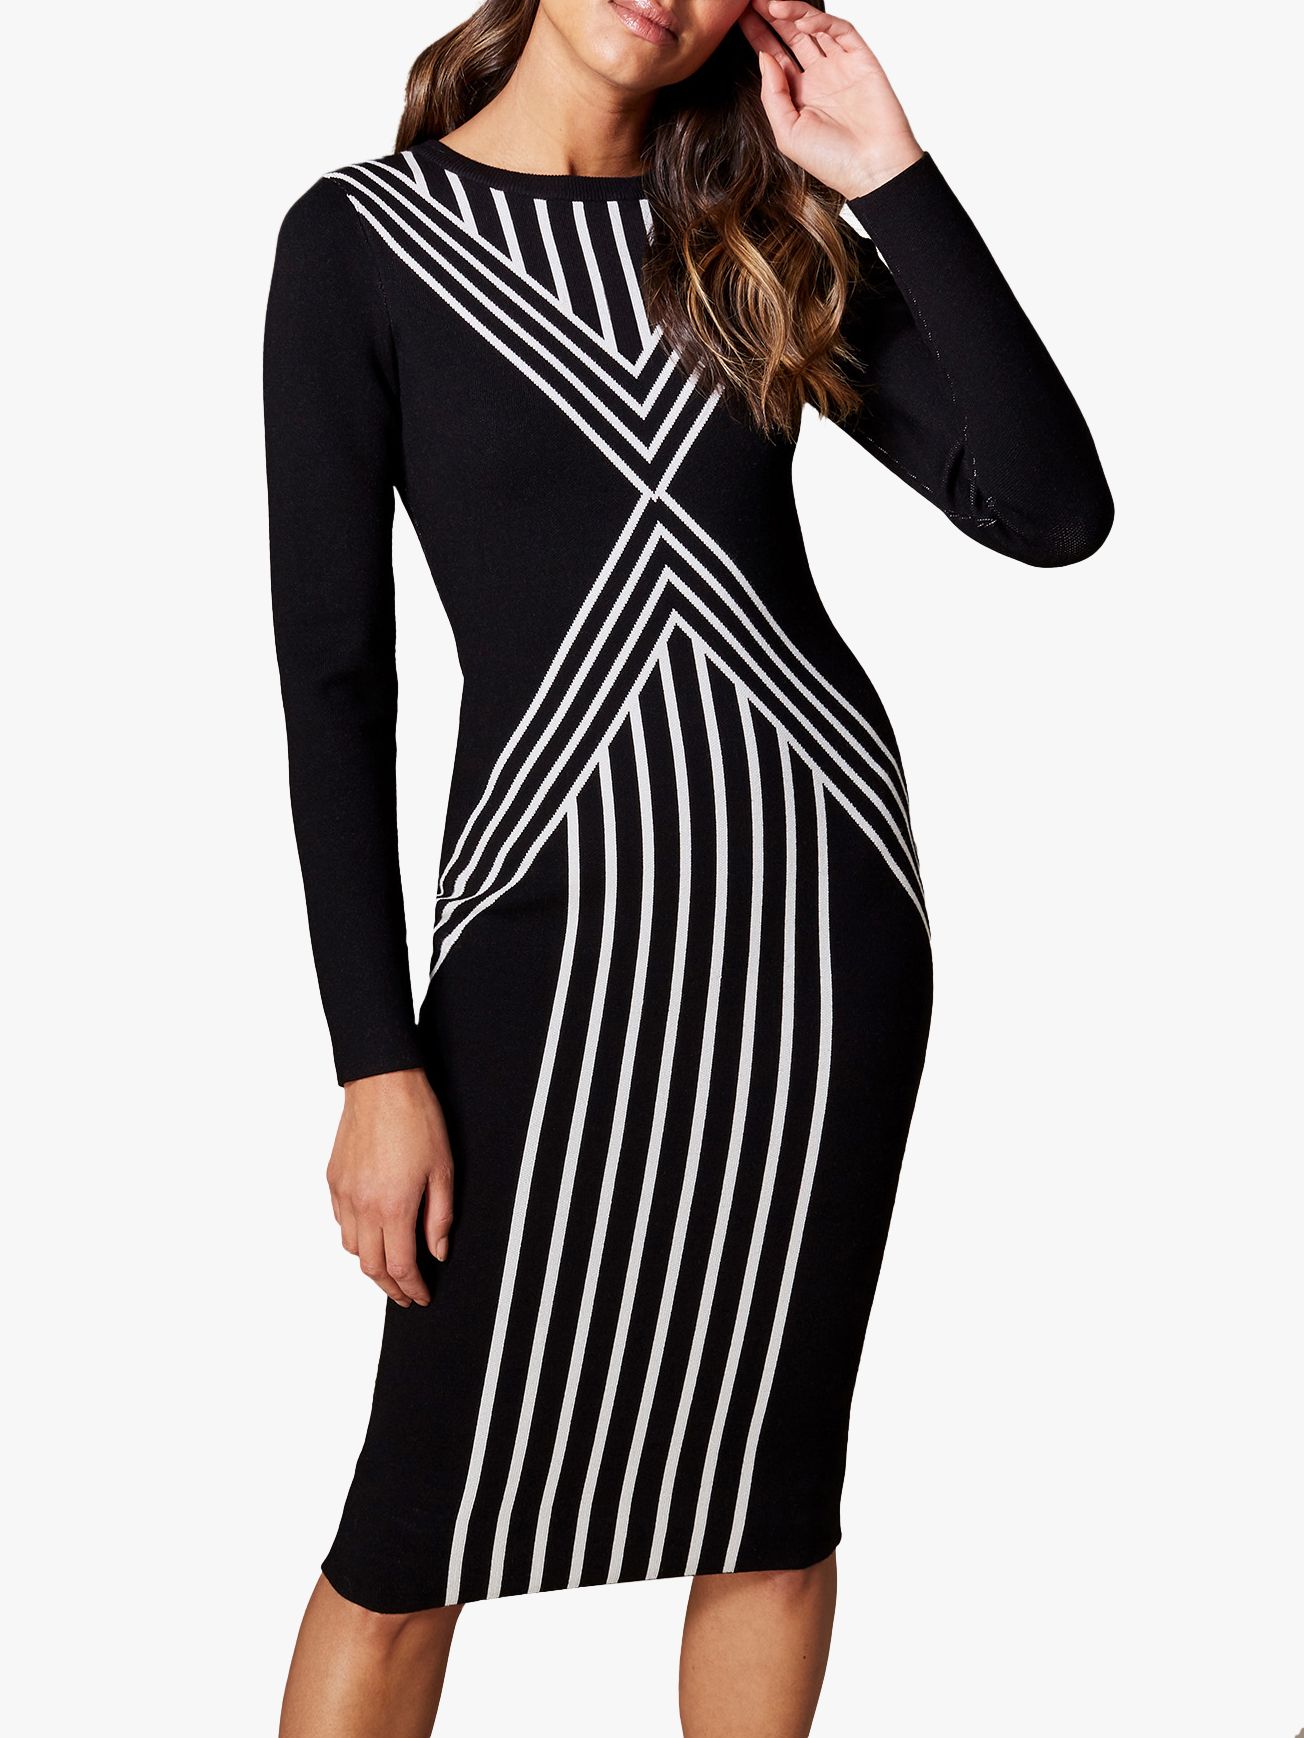 karen millen black white striped dress